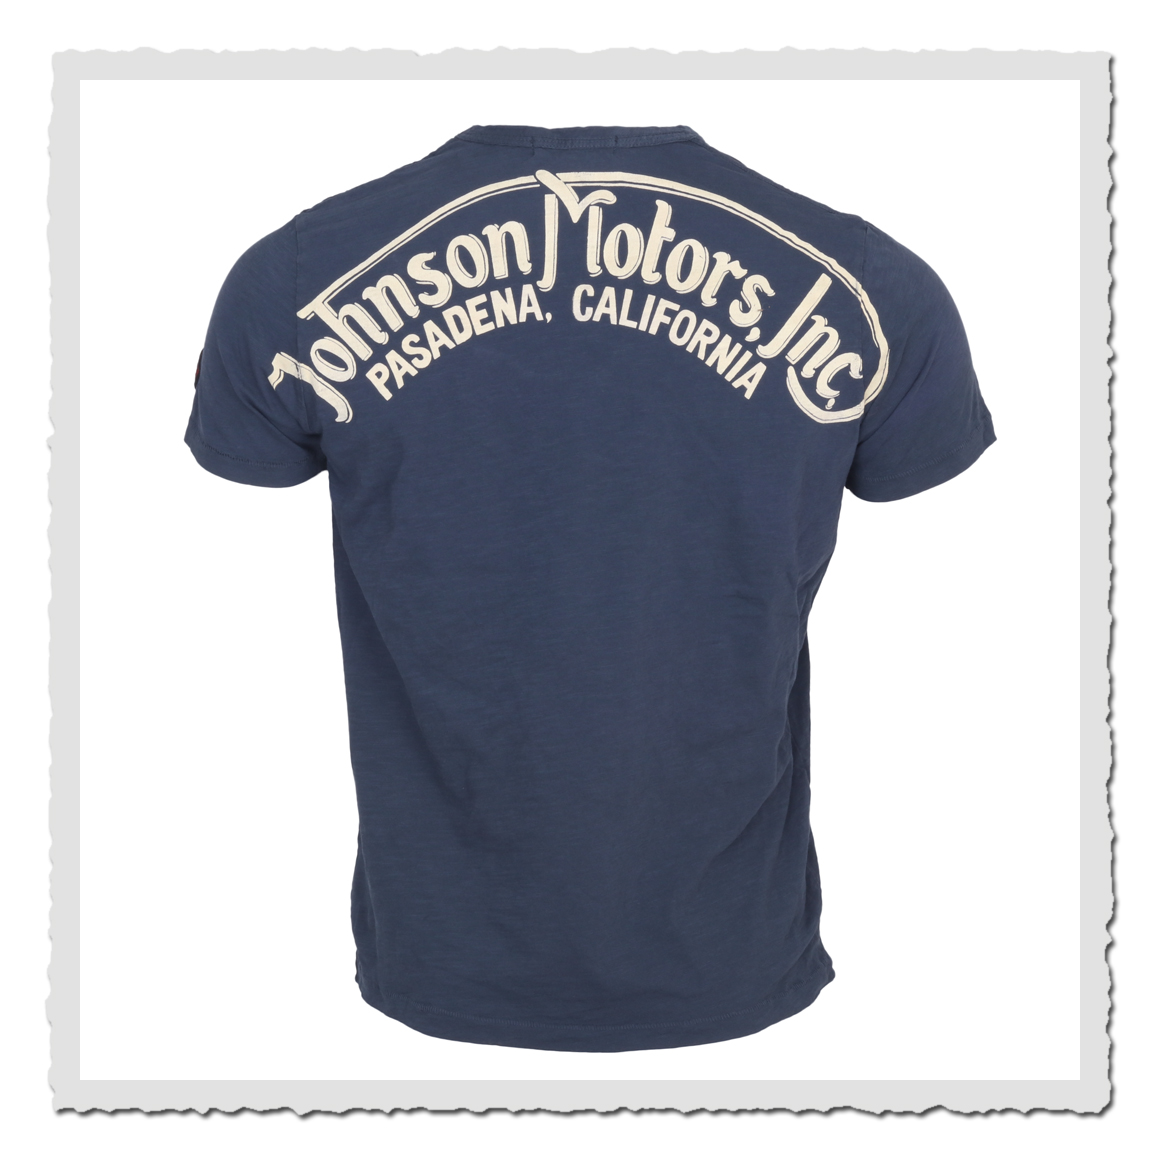 johnson motors shirt winged wheel kaufen